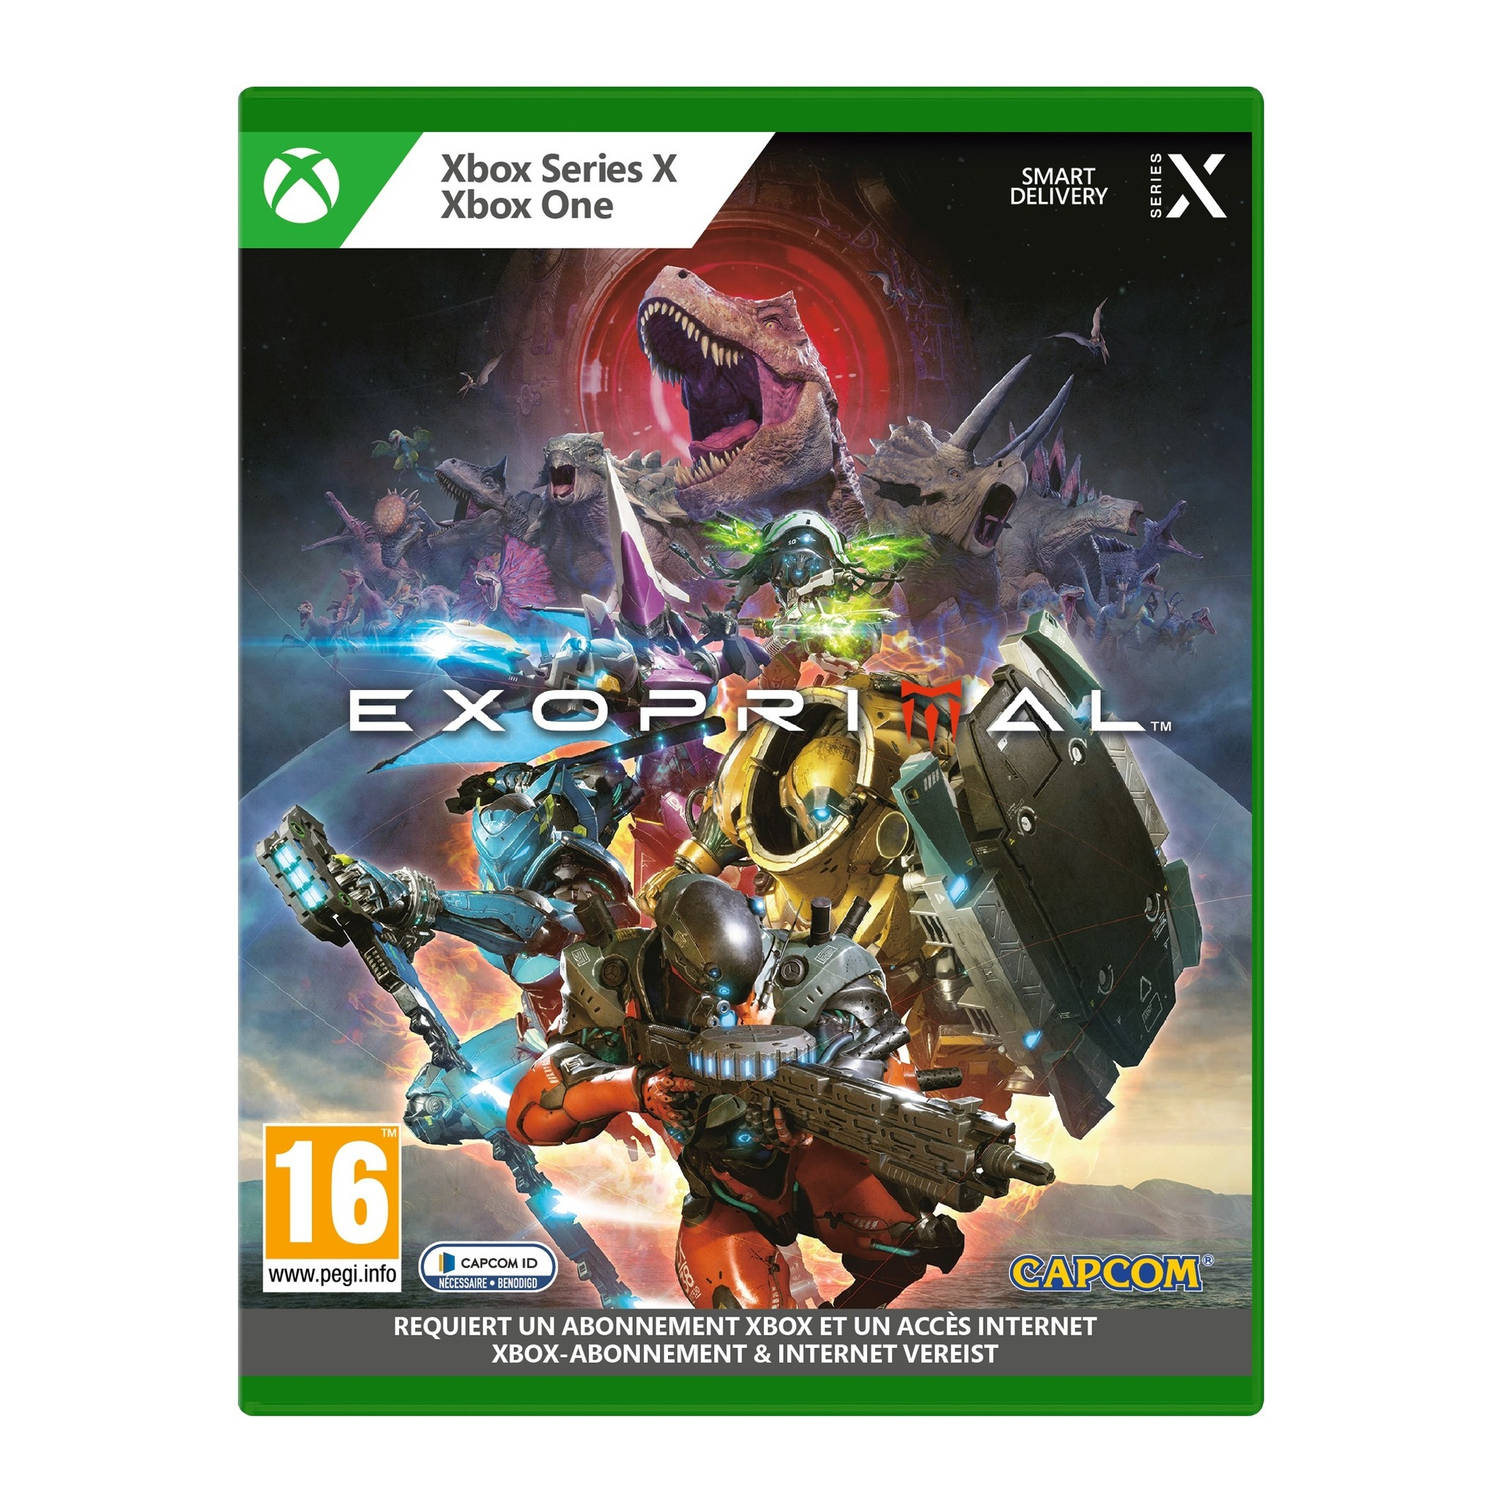 Exoprimal + Pre-order bonus Xbox One & Series X